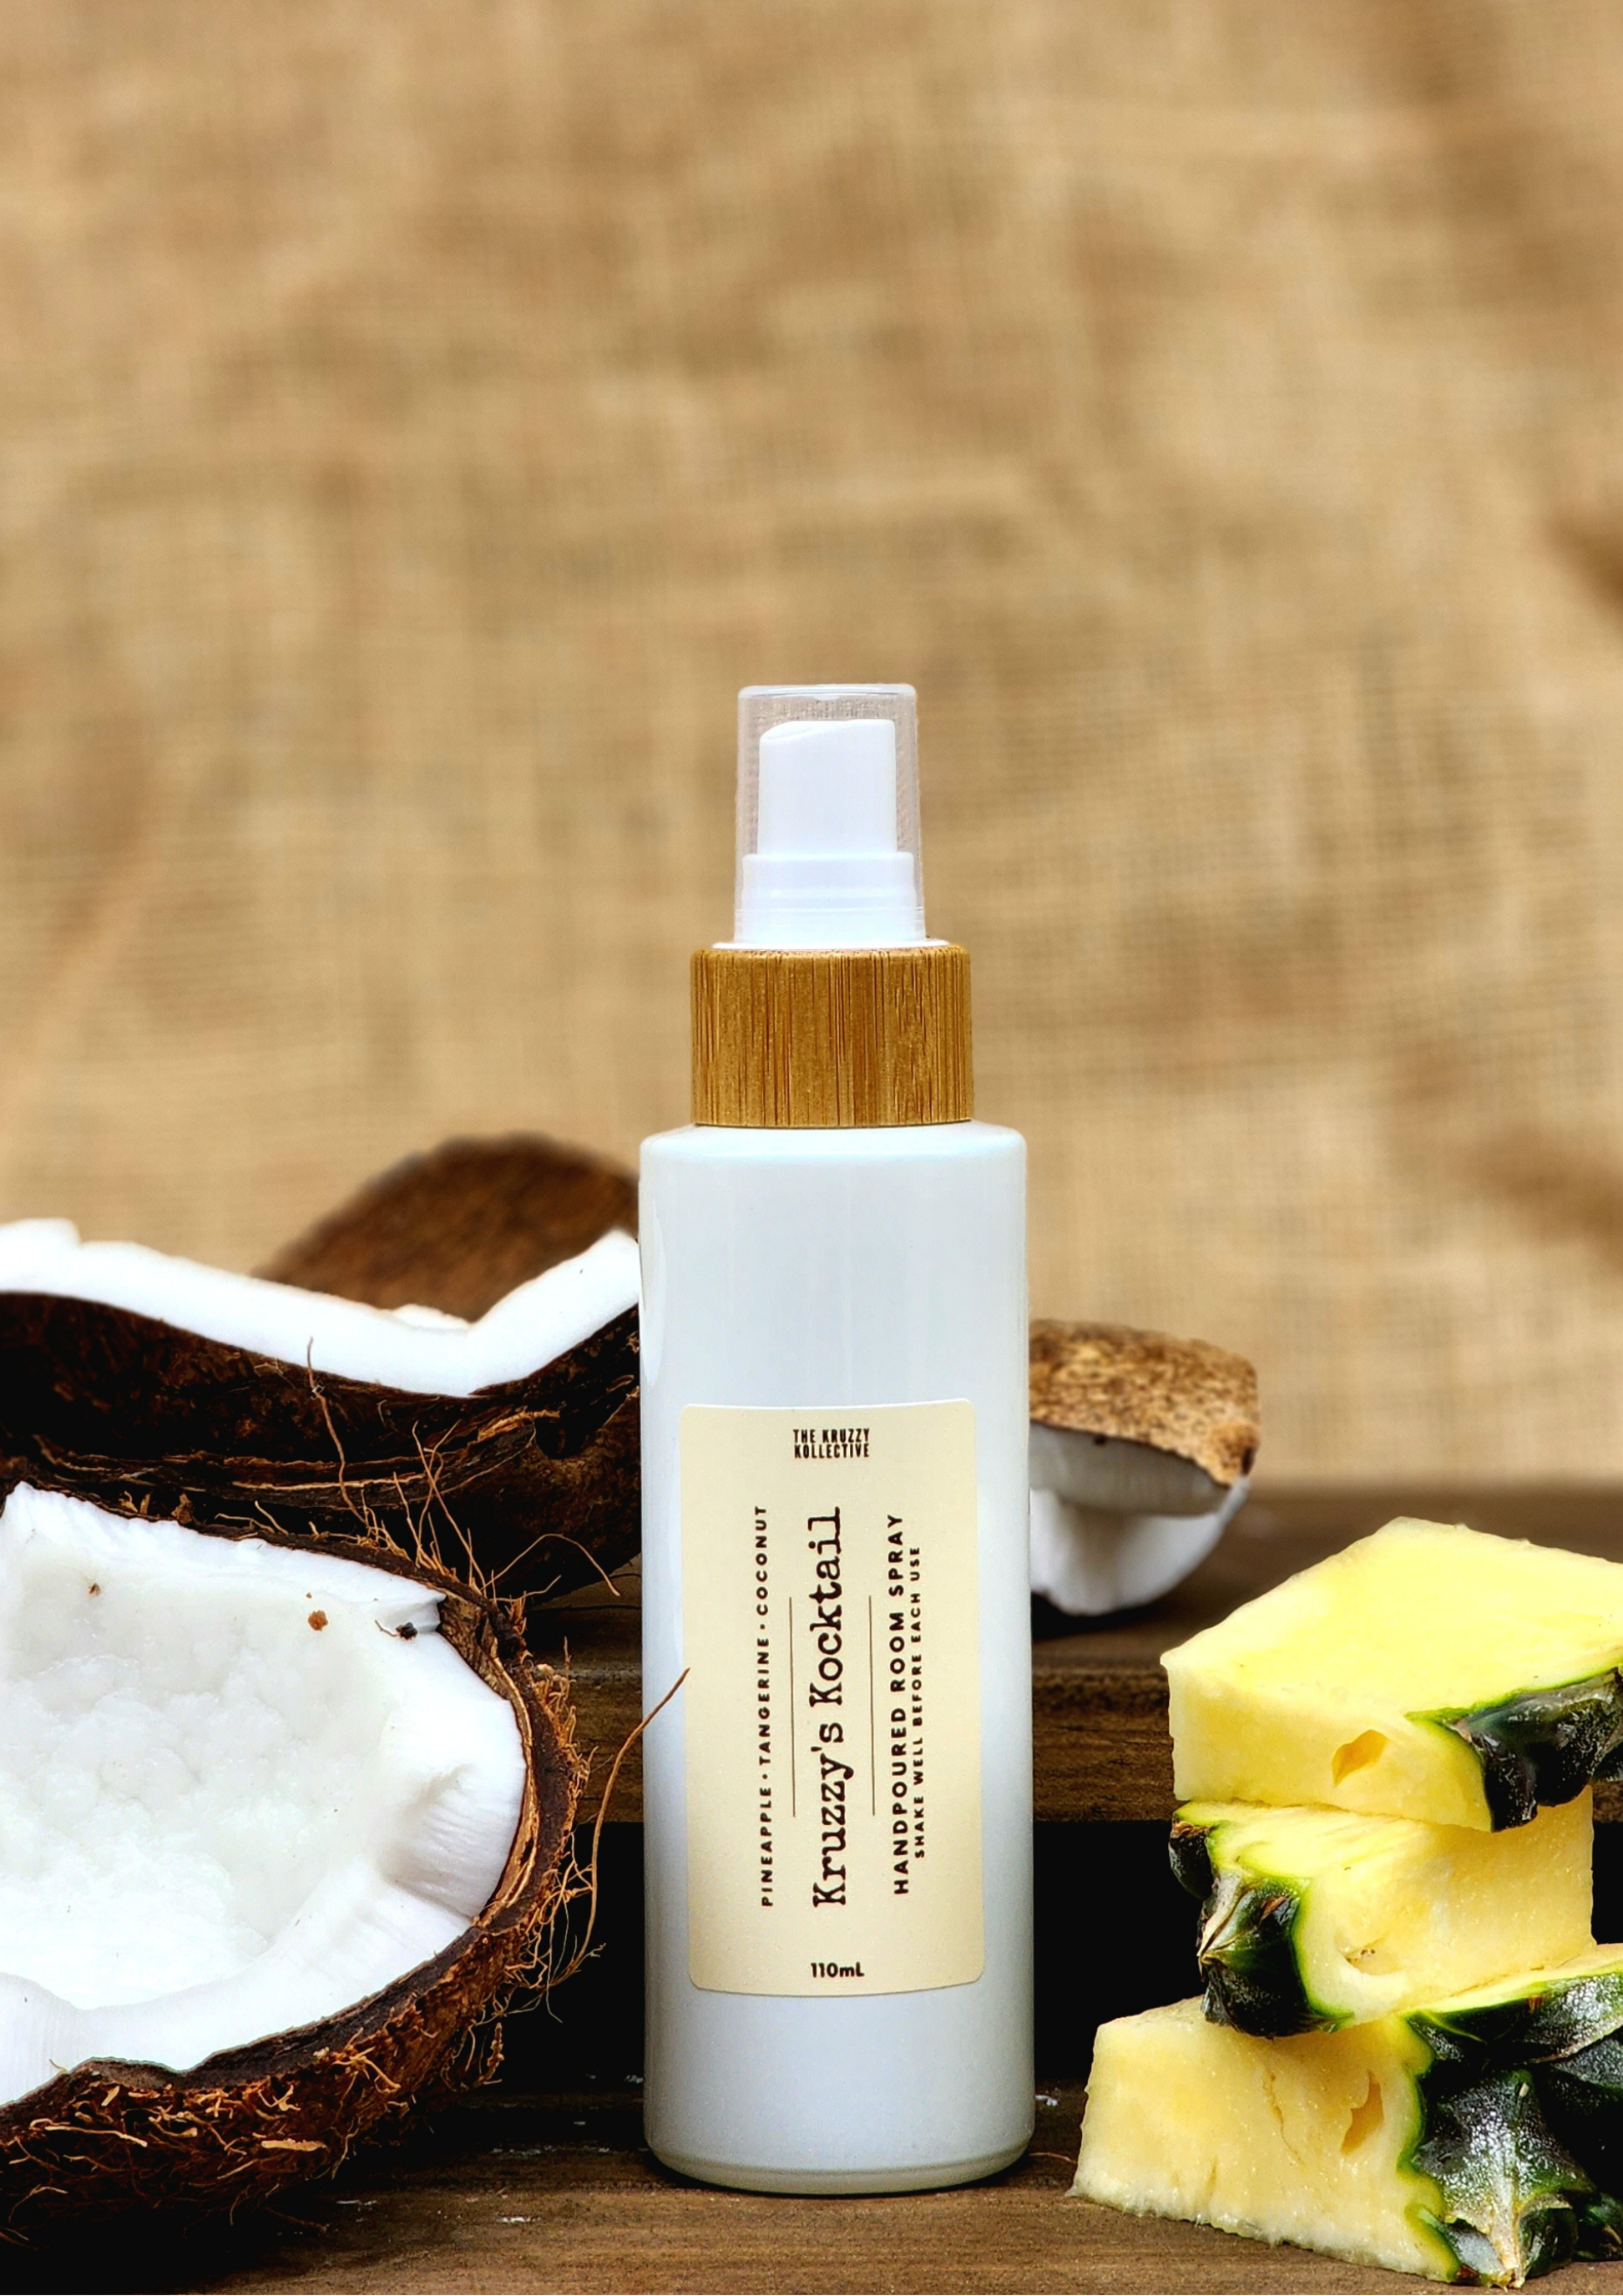 home fragrance spray odor eliminators eco friendly room freshener air freshener pineapple coconut